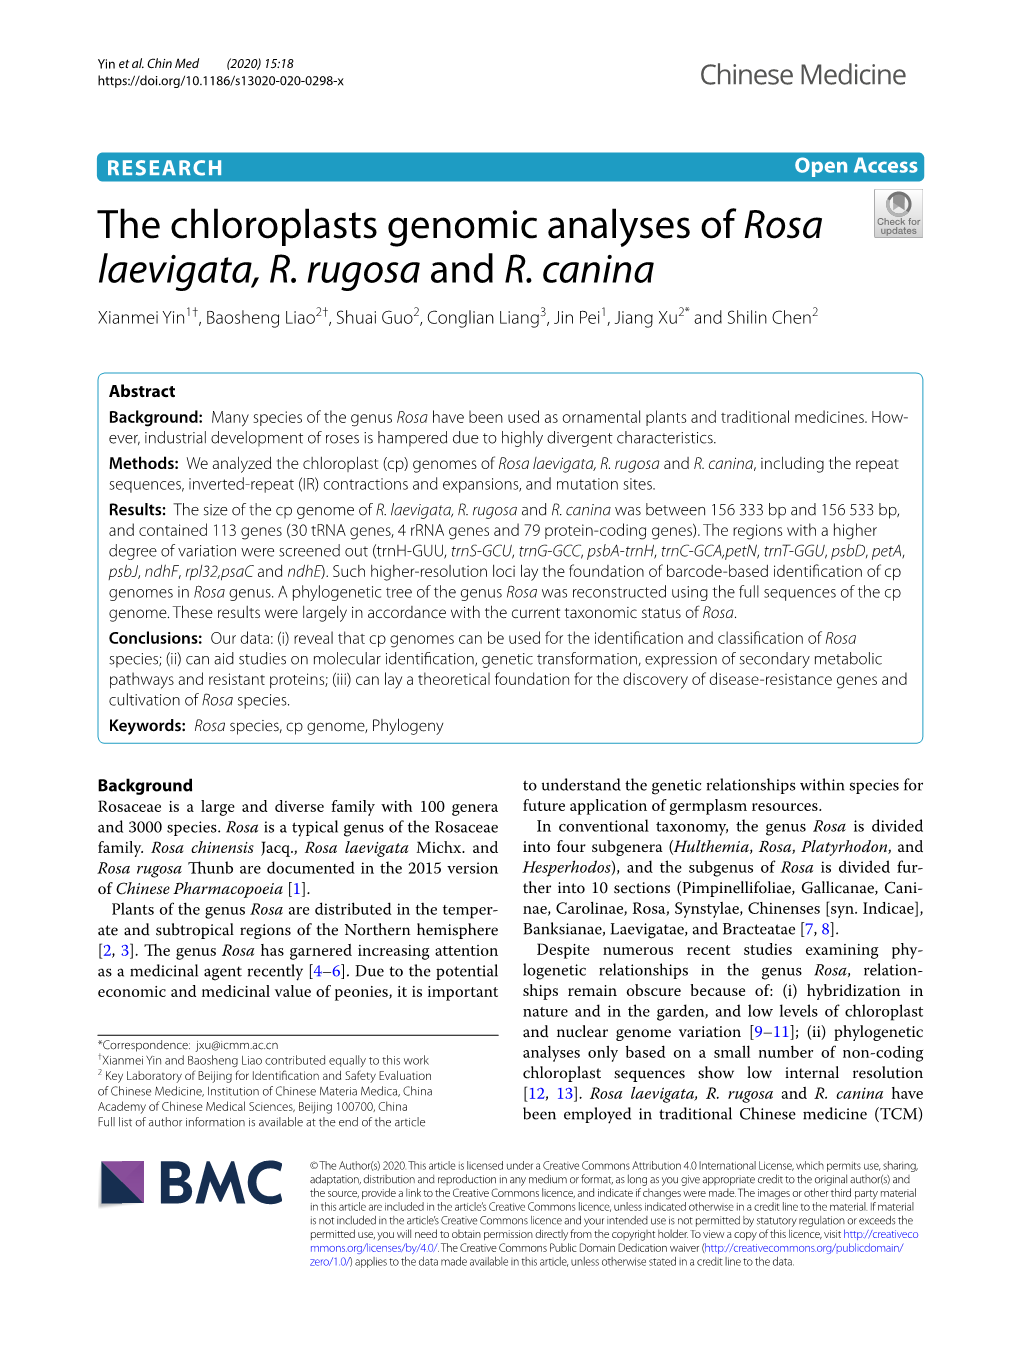 The Chloroplasts Genomic Analyses of Rosa Laevigata, R. Rugosa and R